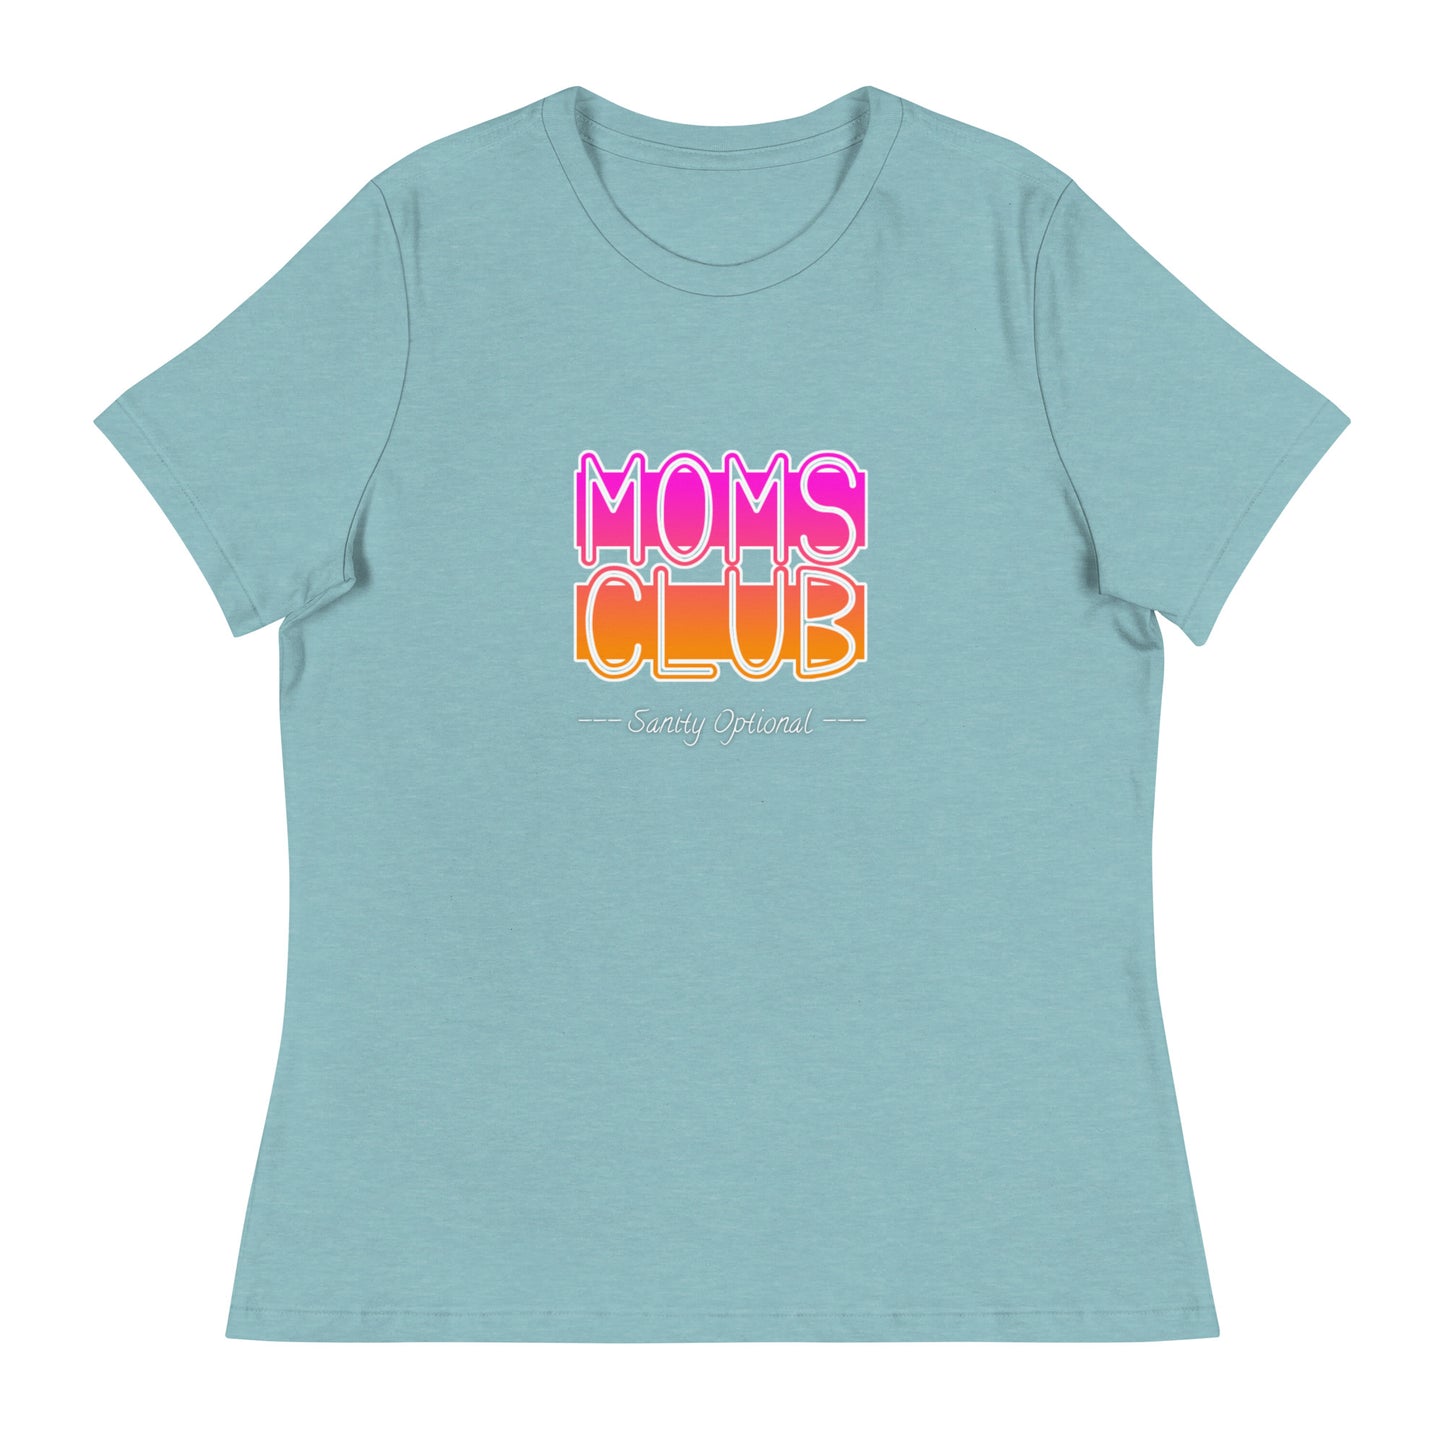 Moms Club Sanity Optional  Women's T-Shirt